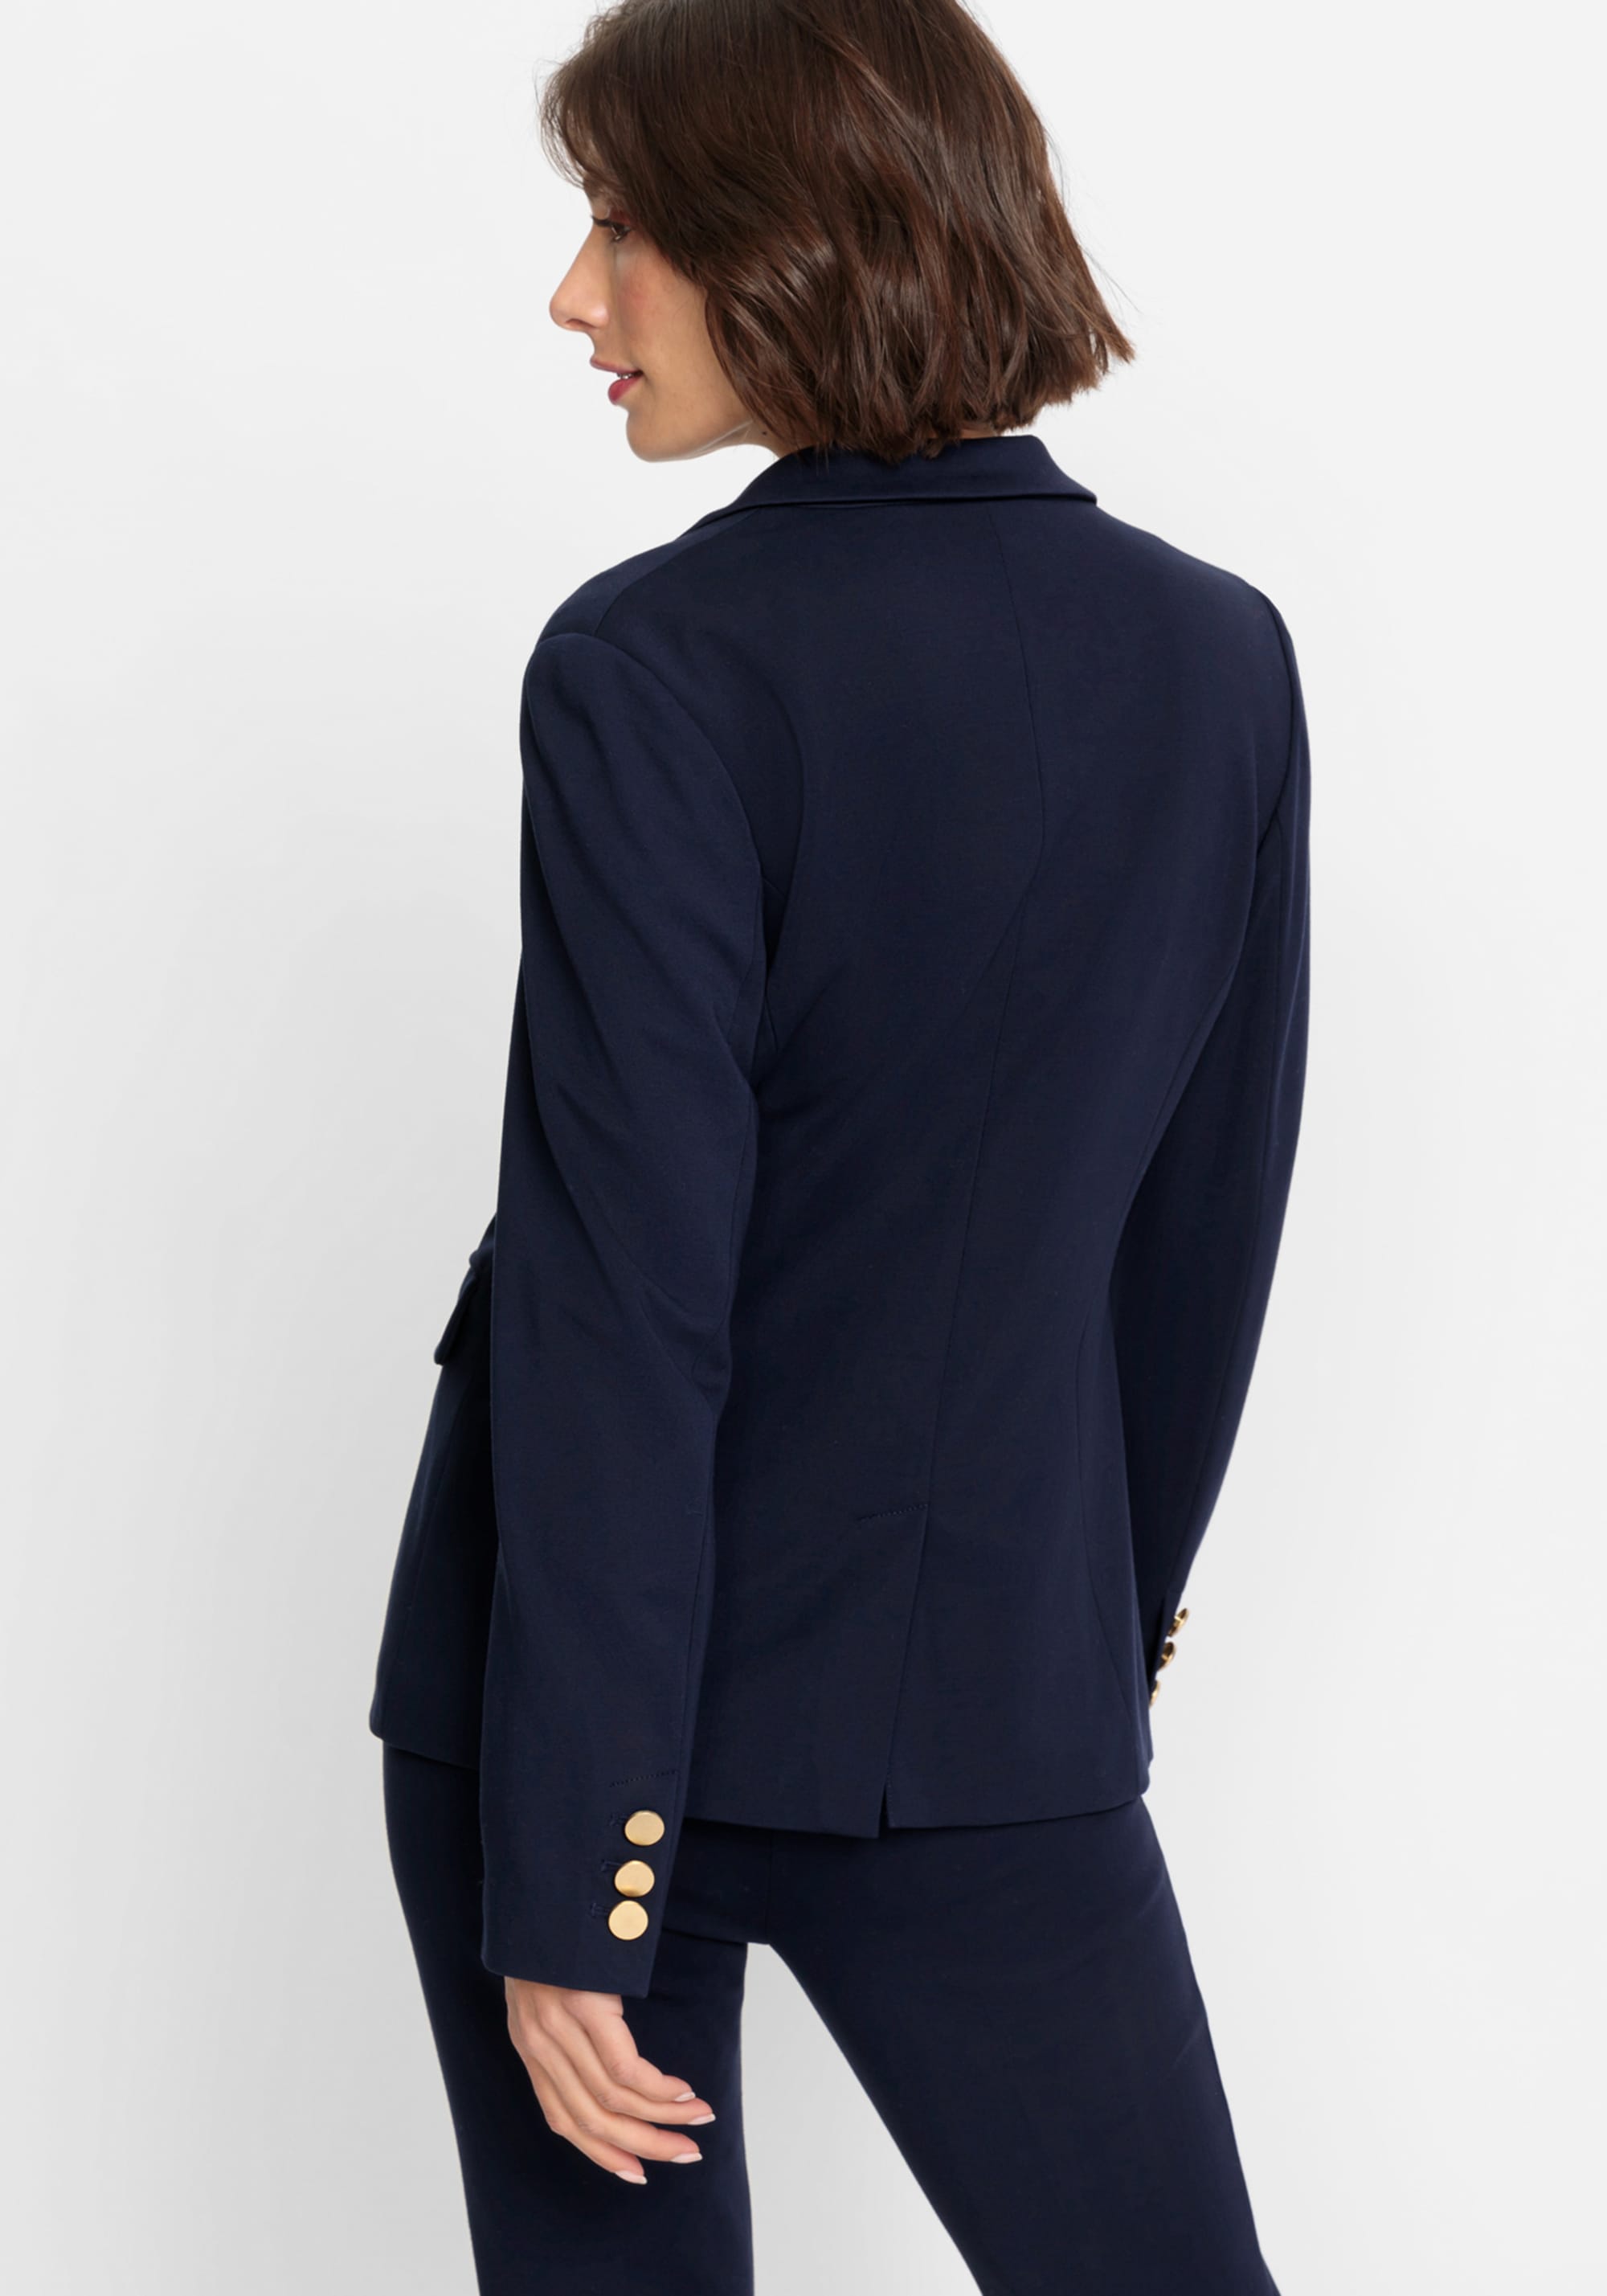 Notch Collar Blazer - Women's Navy Blazer